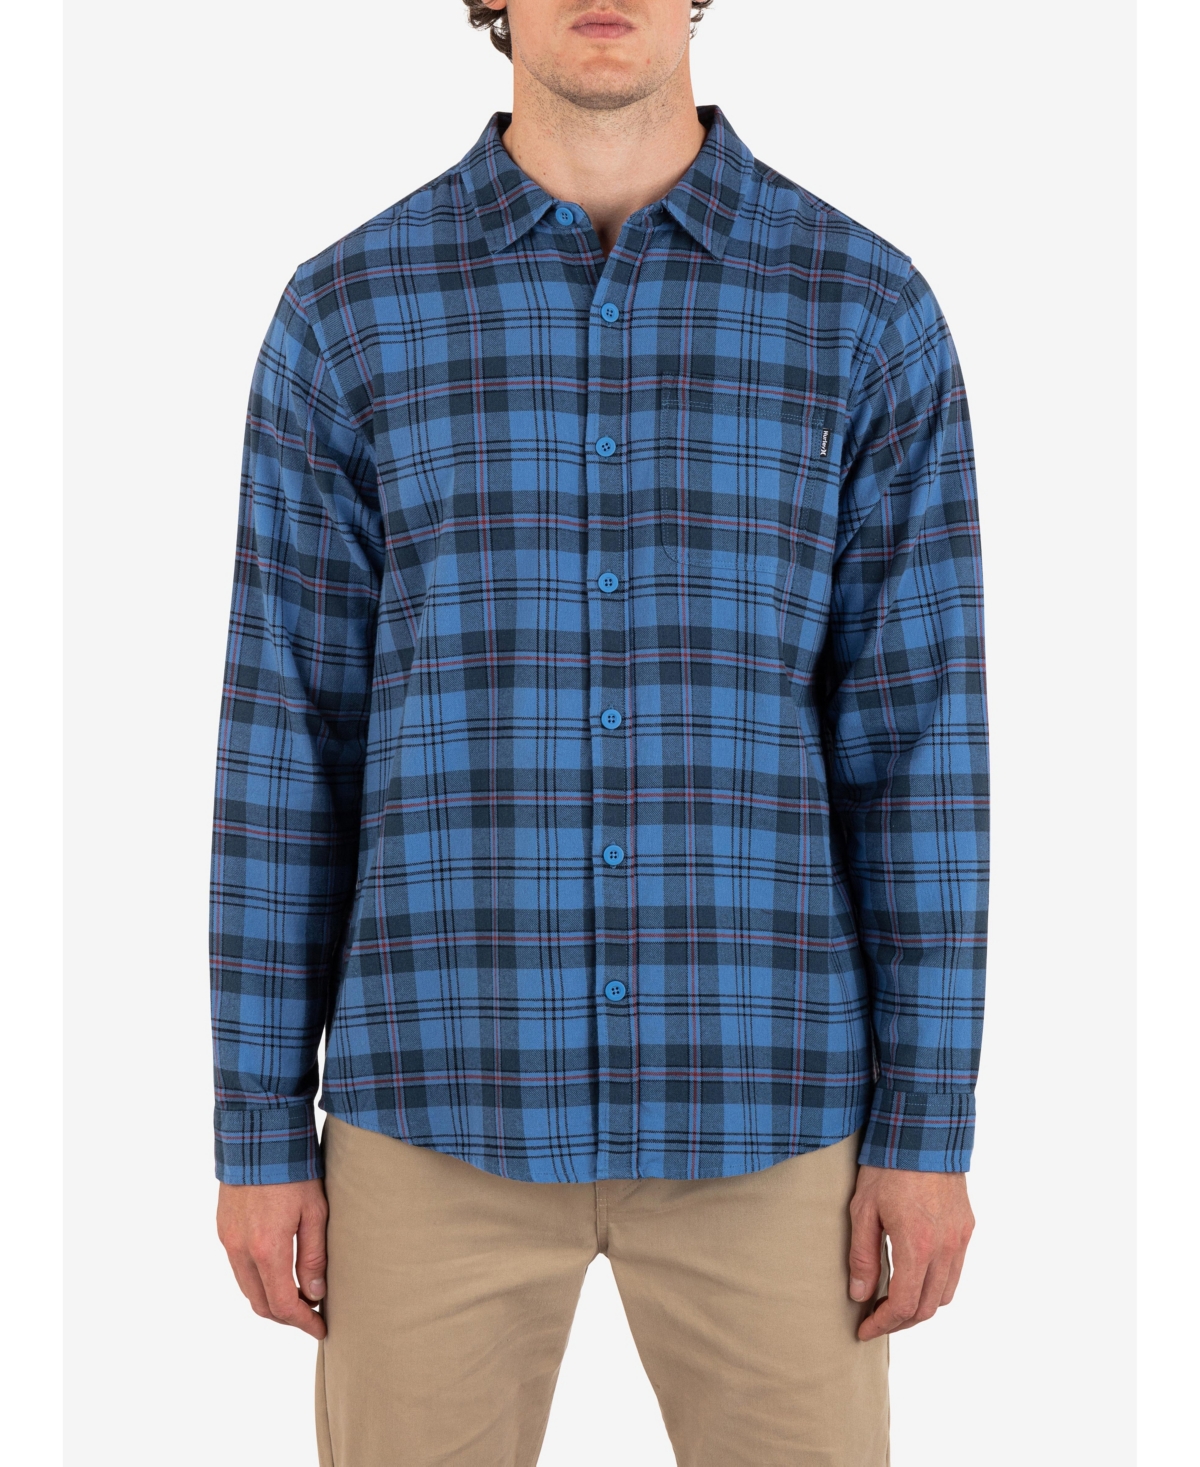 Men's Portland Flannel Long Sleeve Shirt - Maple Cream